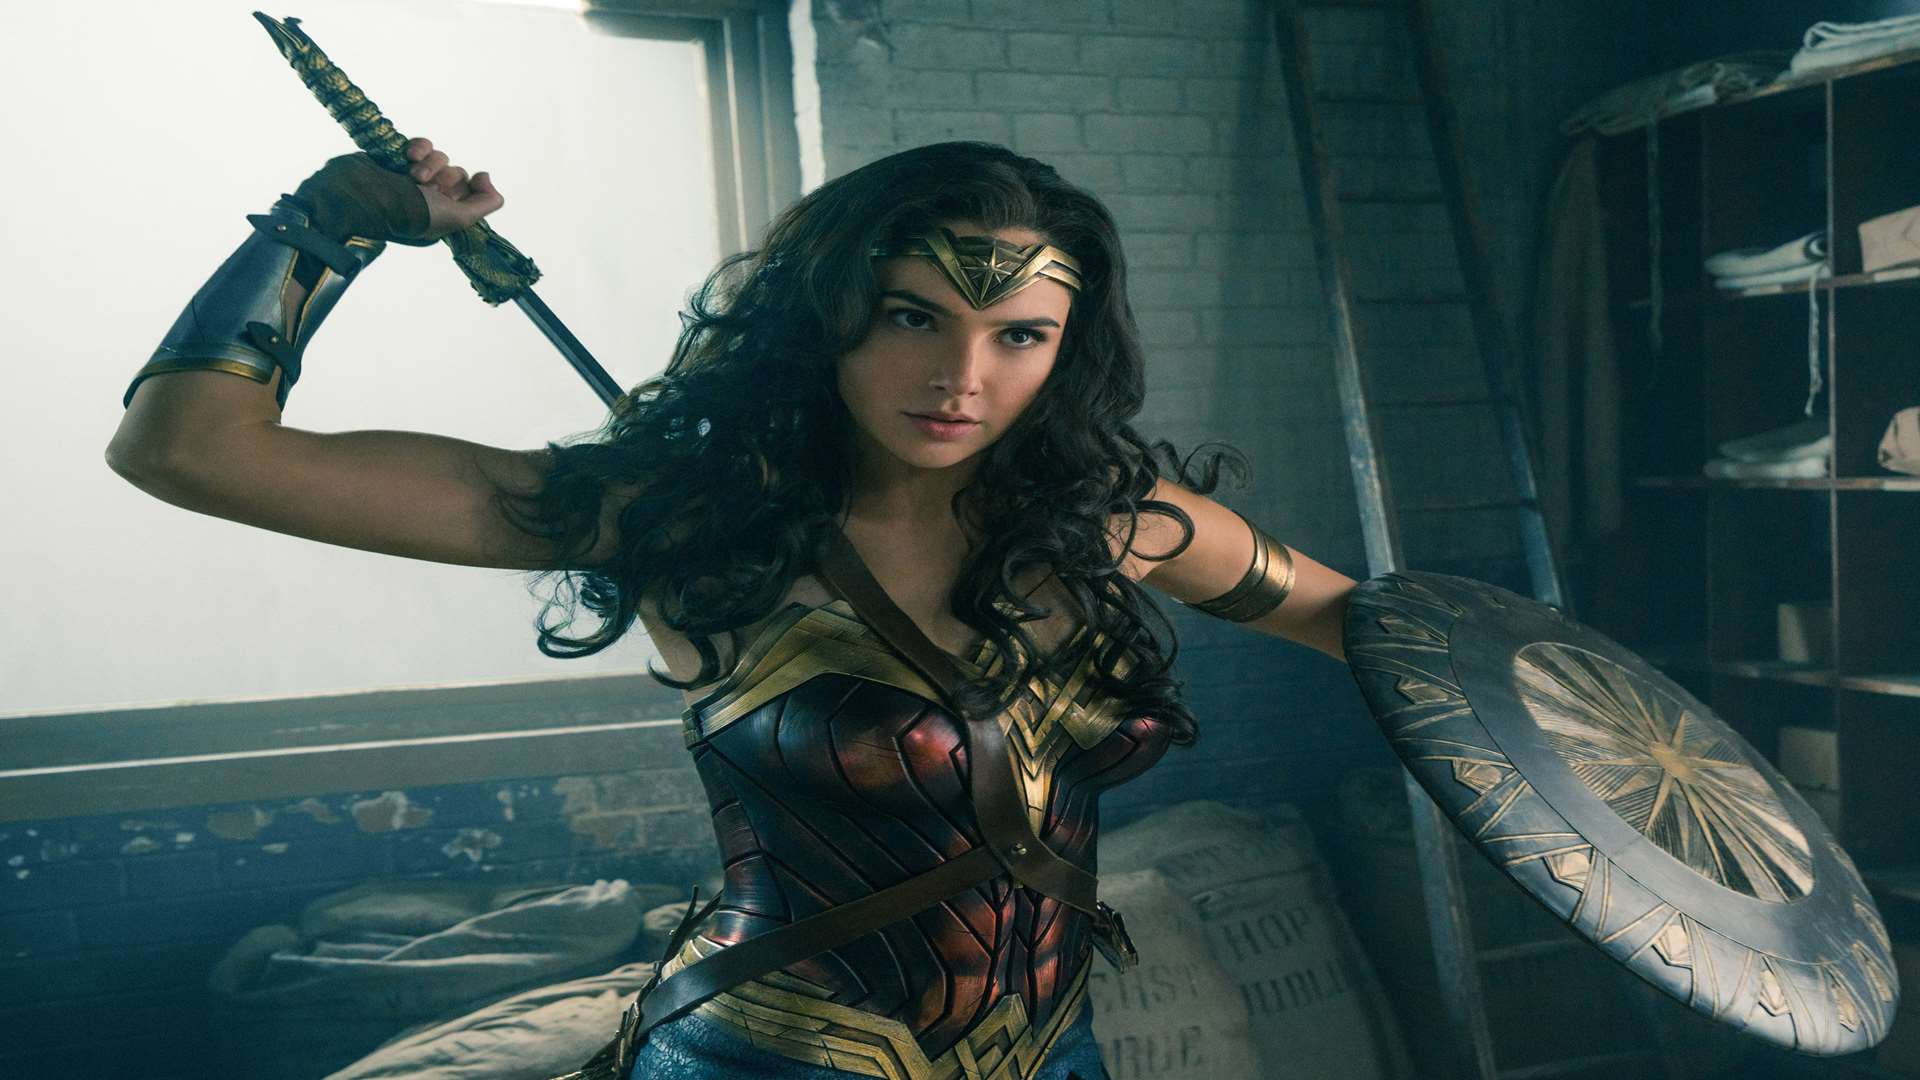 Wonder Woman PA Photo/Warner Brothers.